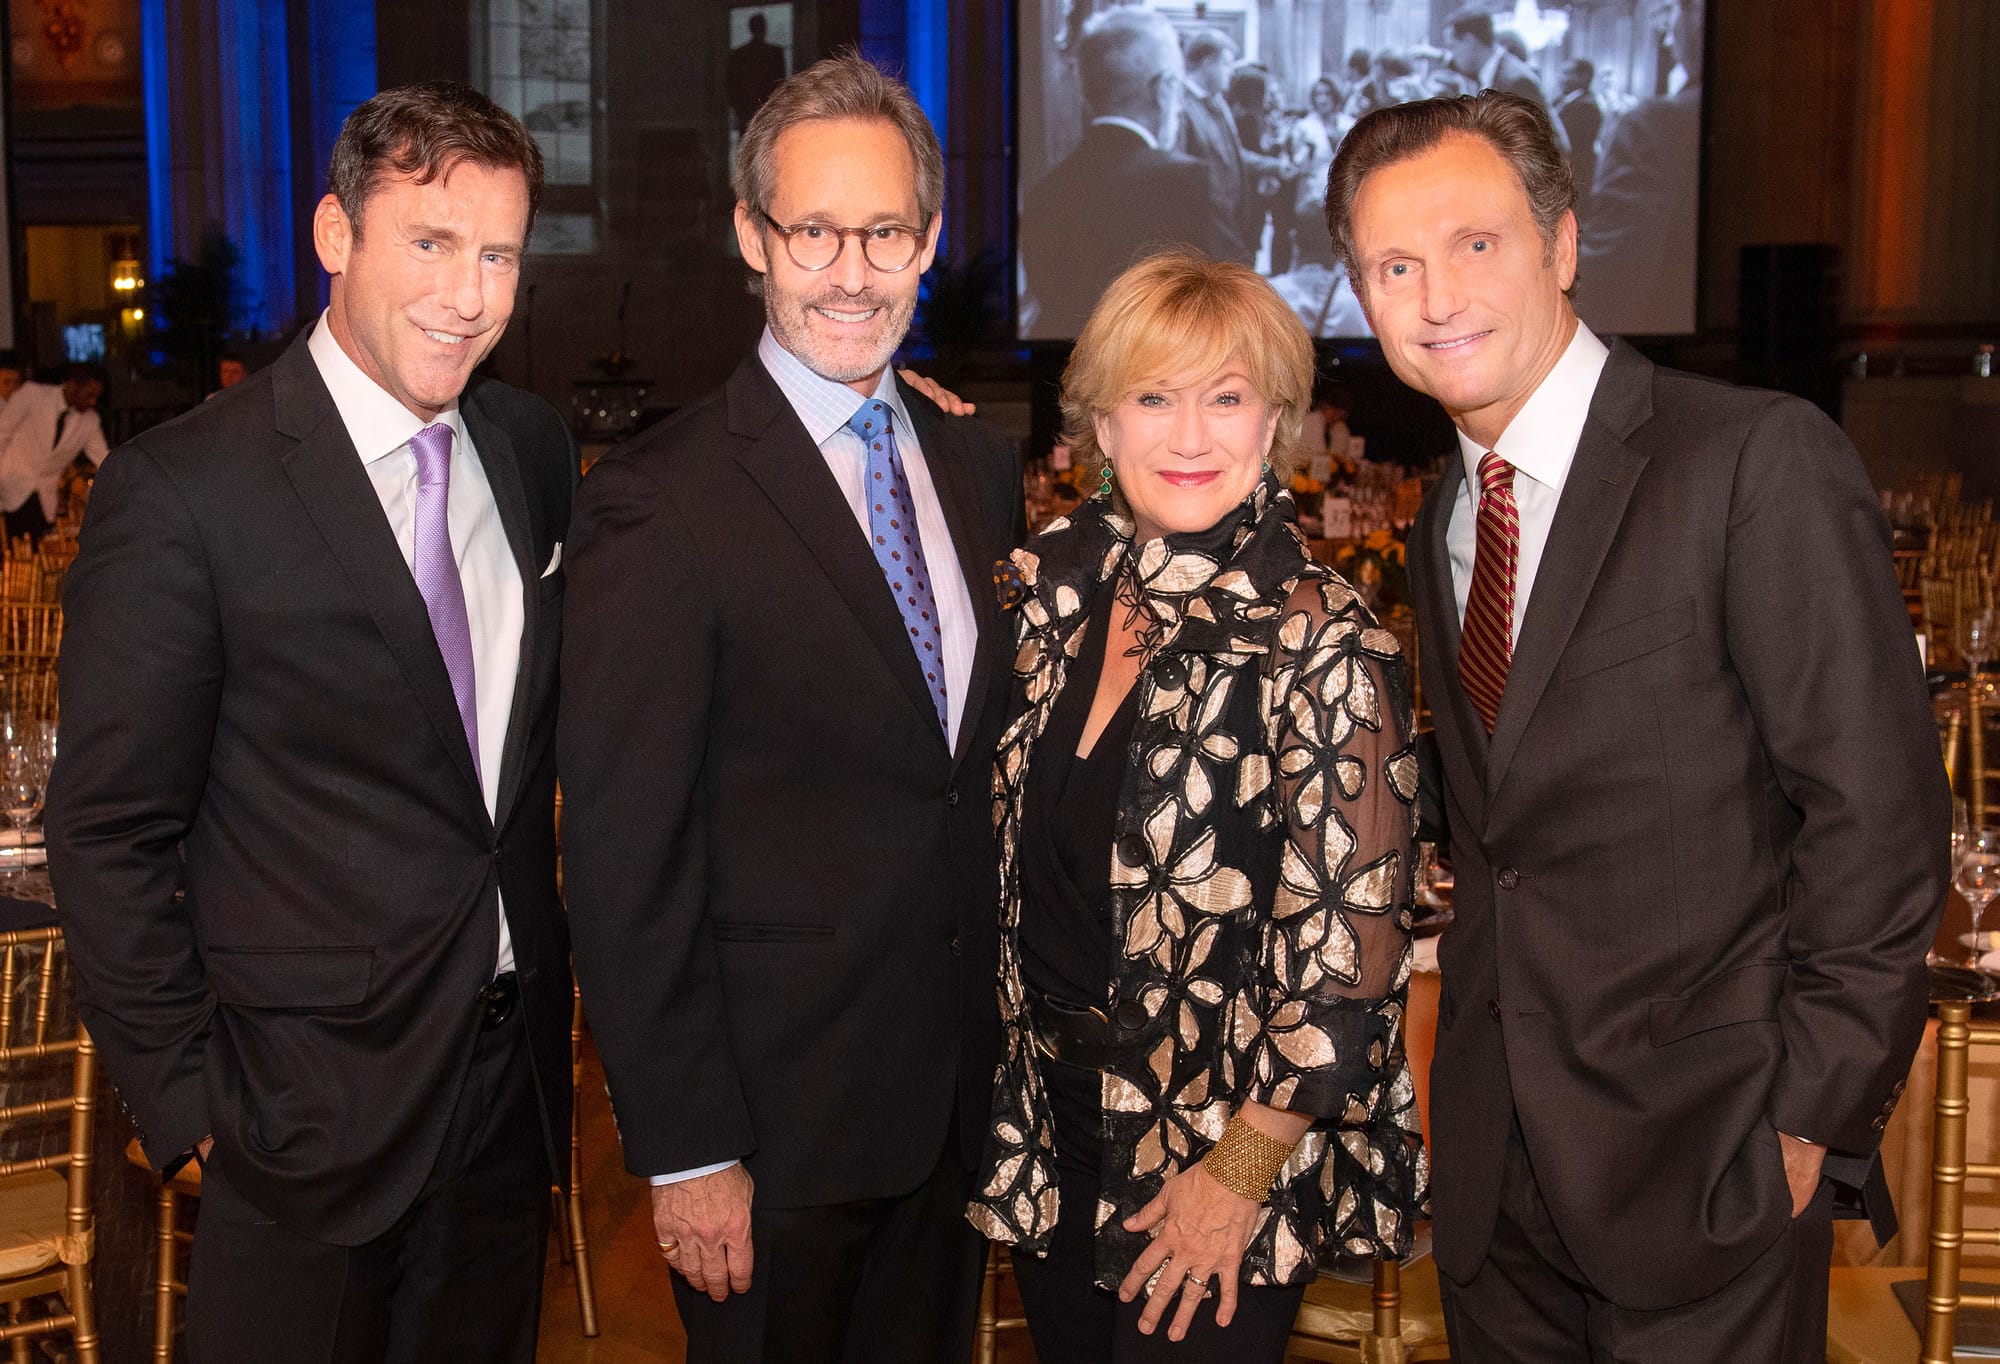 Mark K. Updegrove, president and CEO of the LBJ Foundation, Michel Gill, Jayne Atkinson, and Tony Goldwyn. LBJ Foundation photo by Daniel Swartz, 2019.